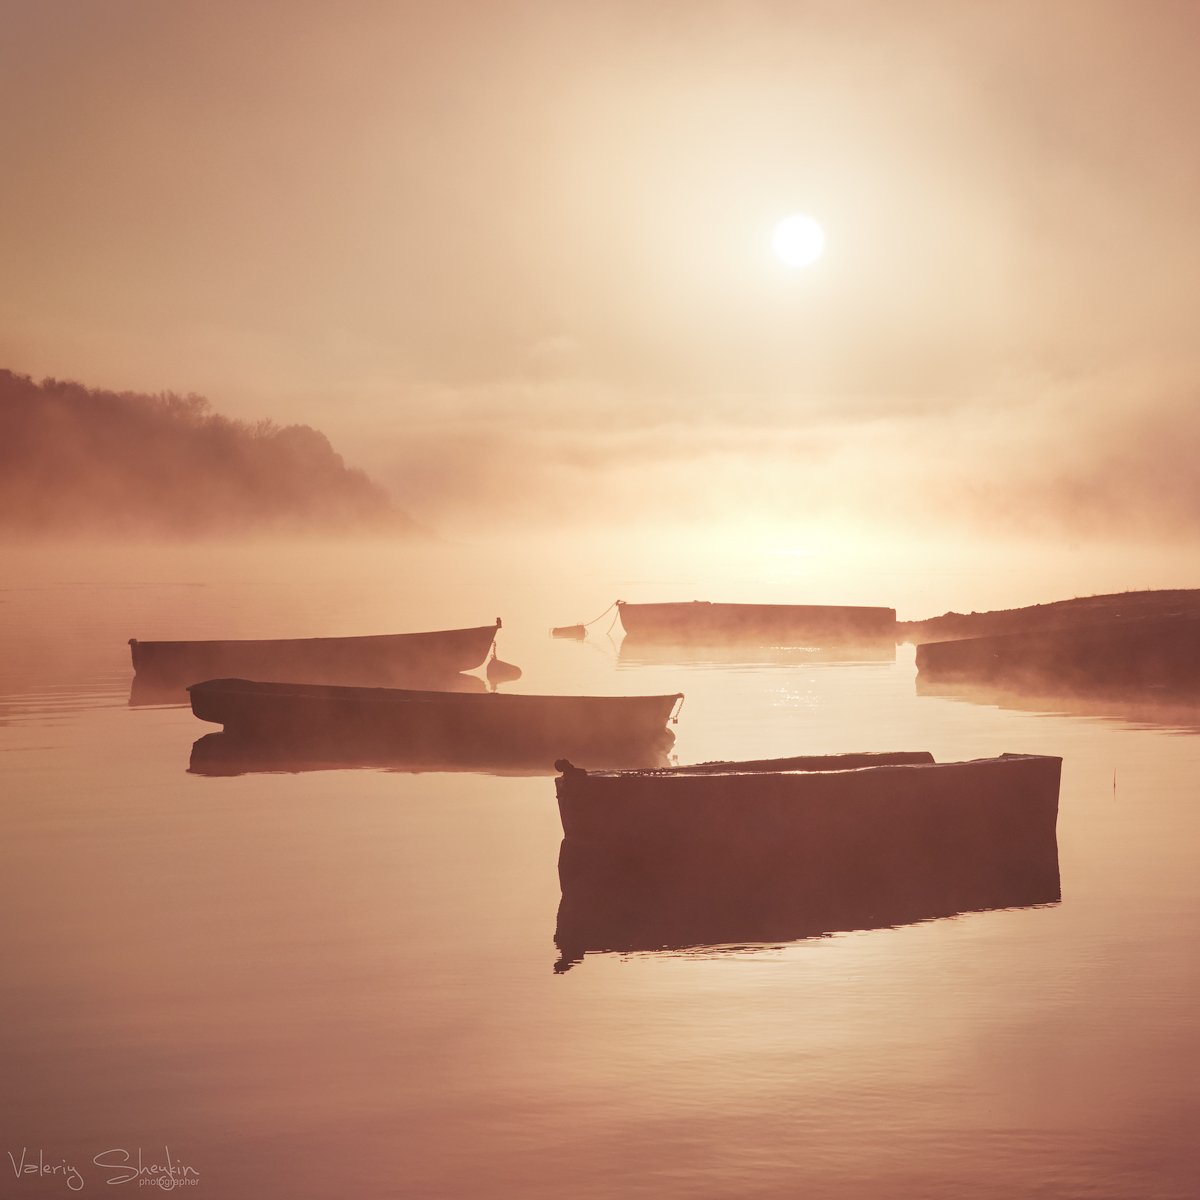 утро#солнце#туман# лодки#вода#туман#тишина#спокойствие#красивоефото#настроение, Валерий Шейкин